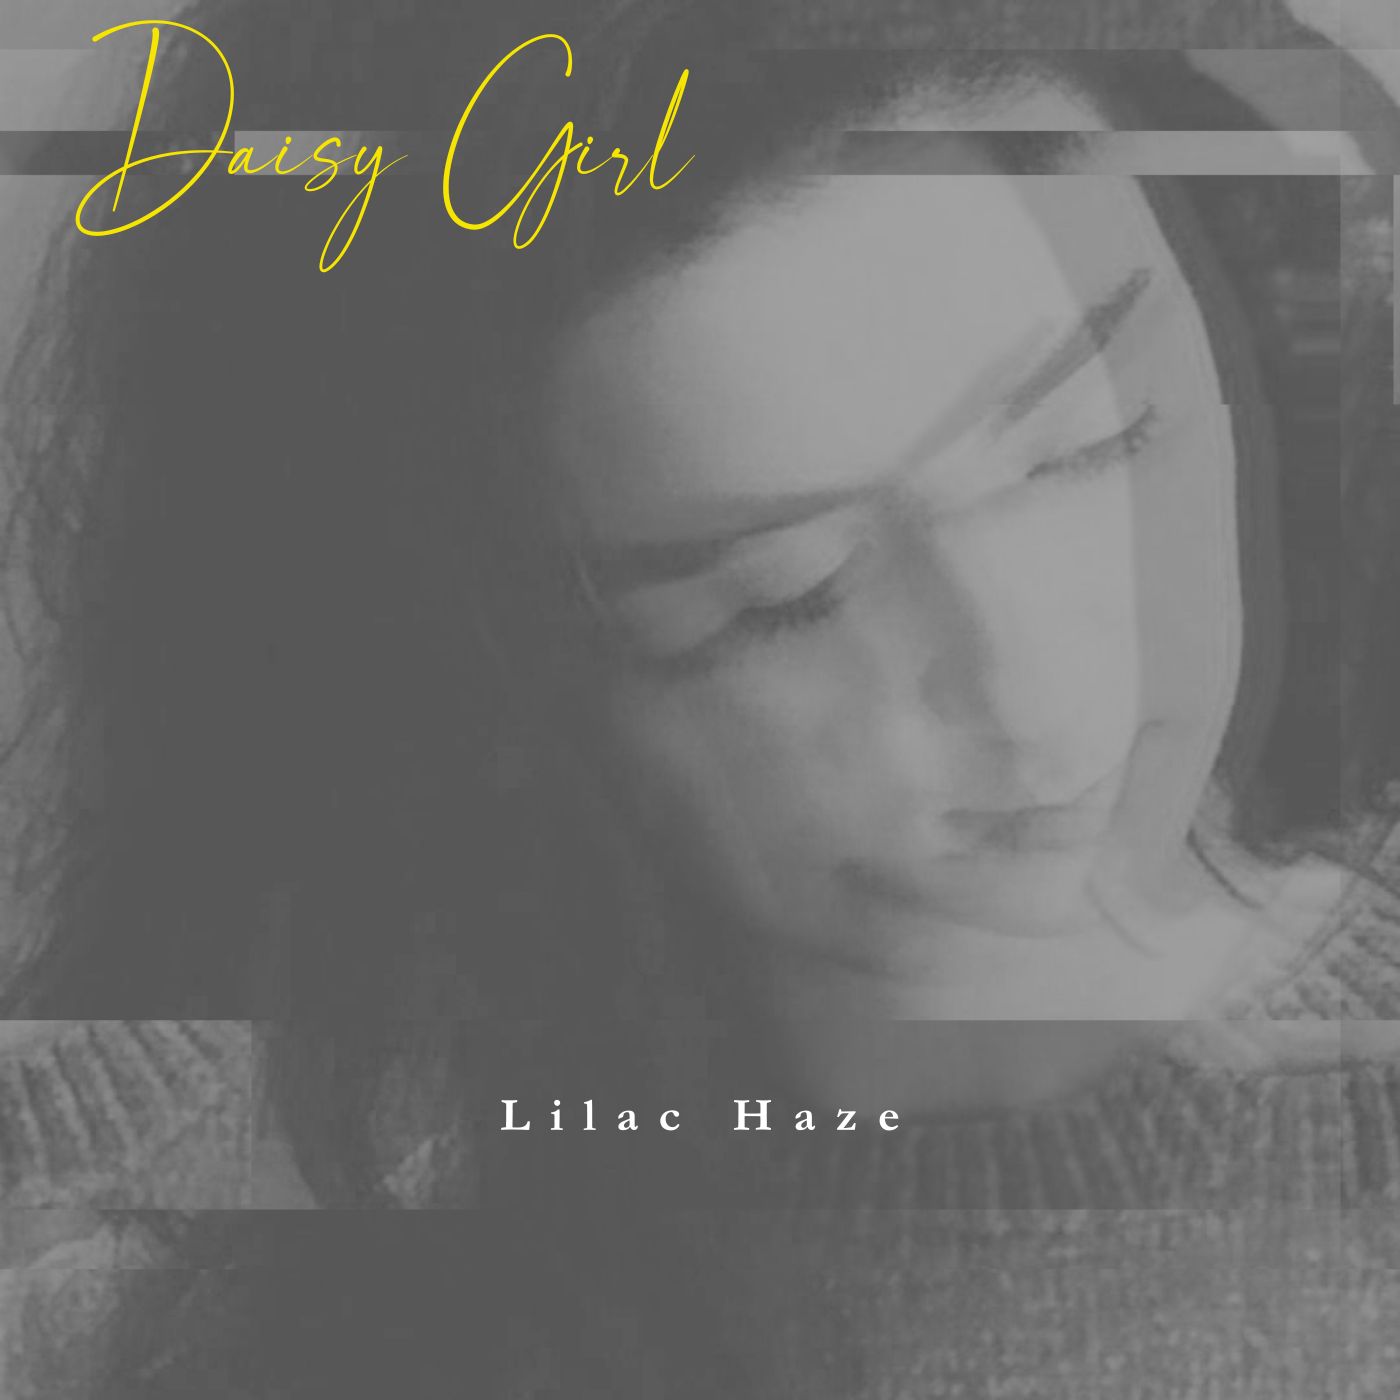 LISTEN: “Daisy Girl” by Lilac Haze